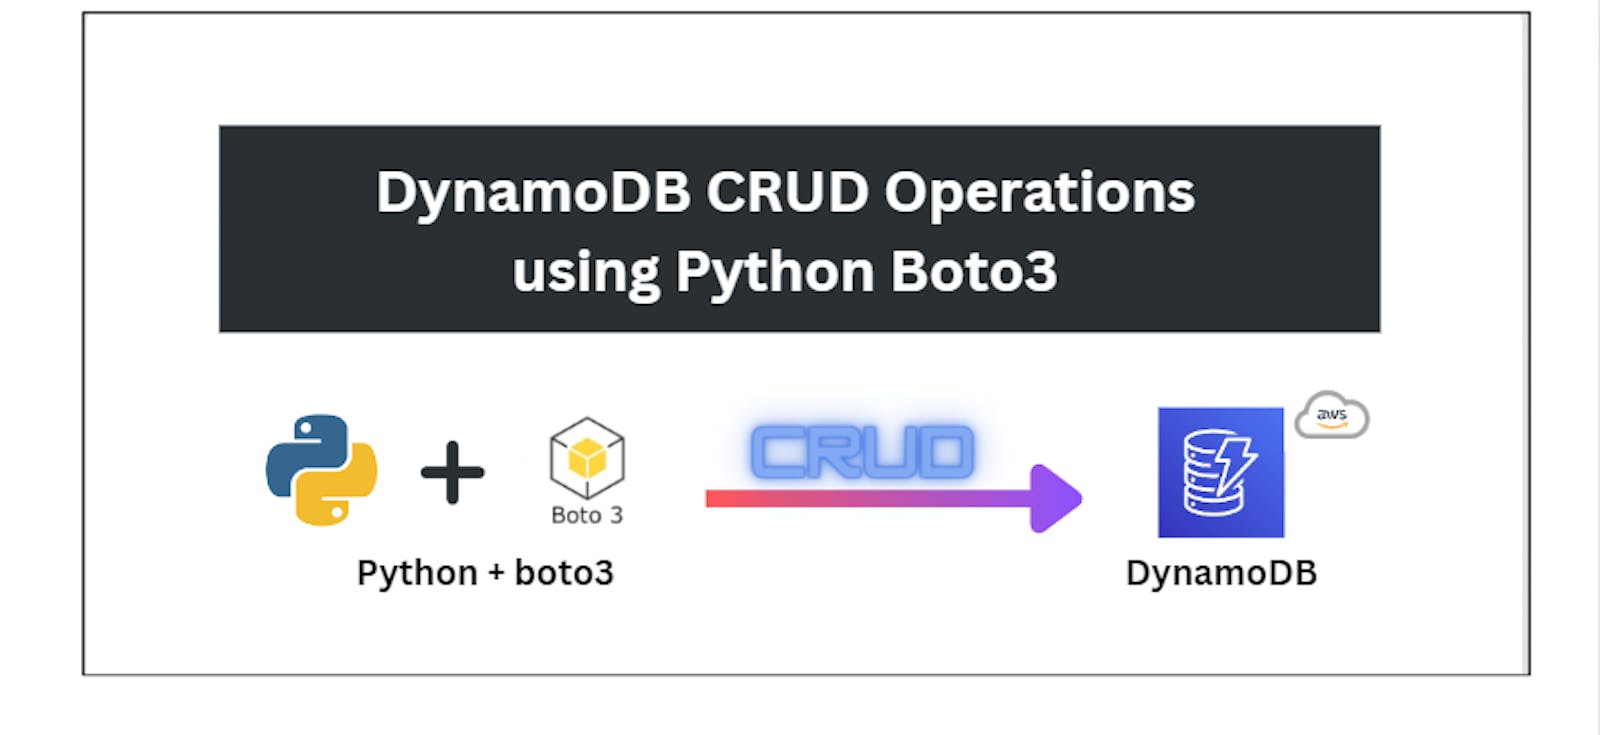 Implementing DynamoDB CRUD operations using AWS SDKs (Python boto3)